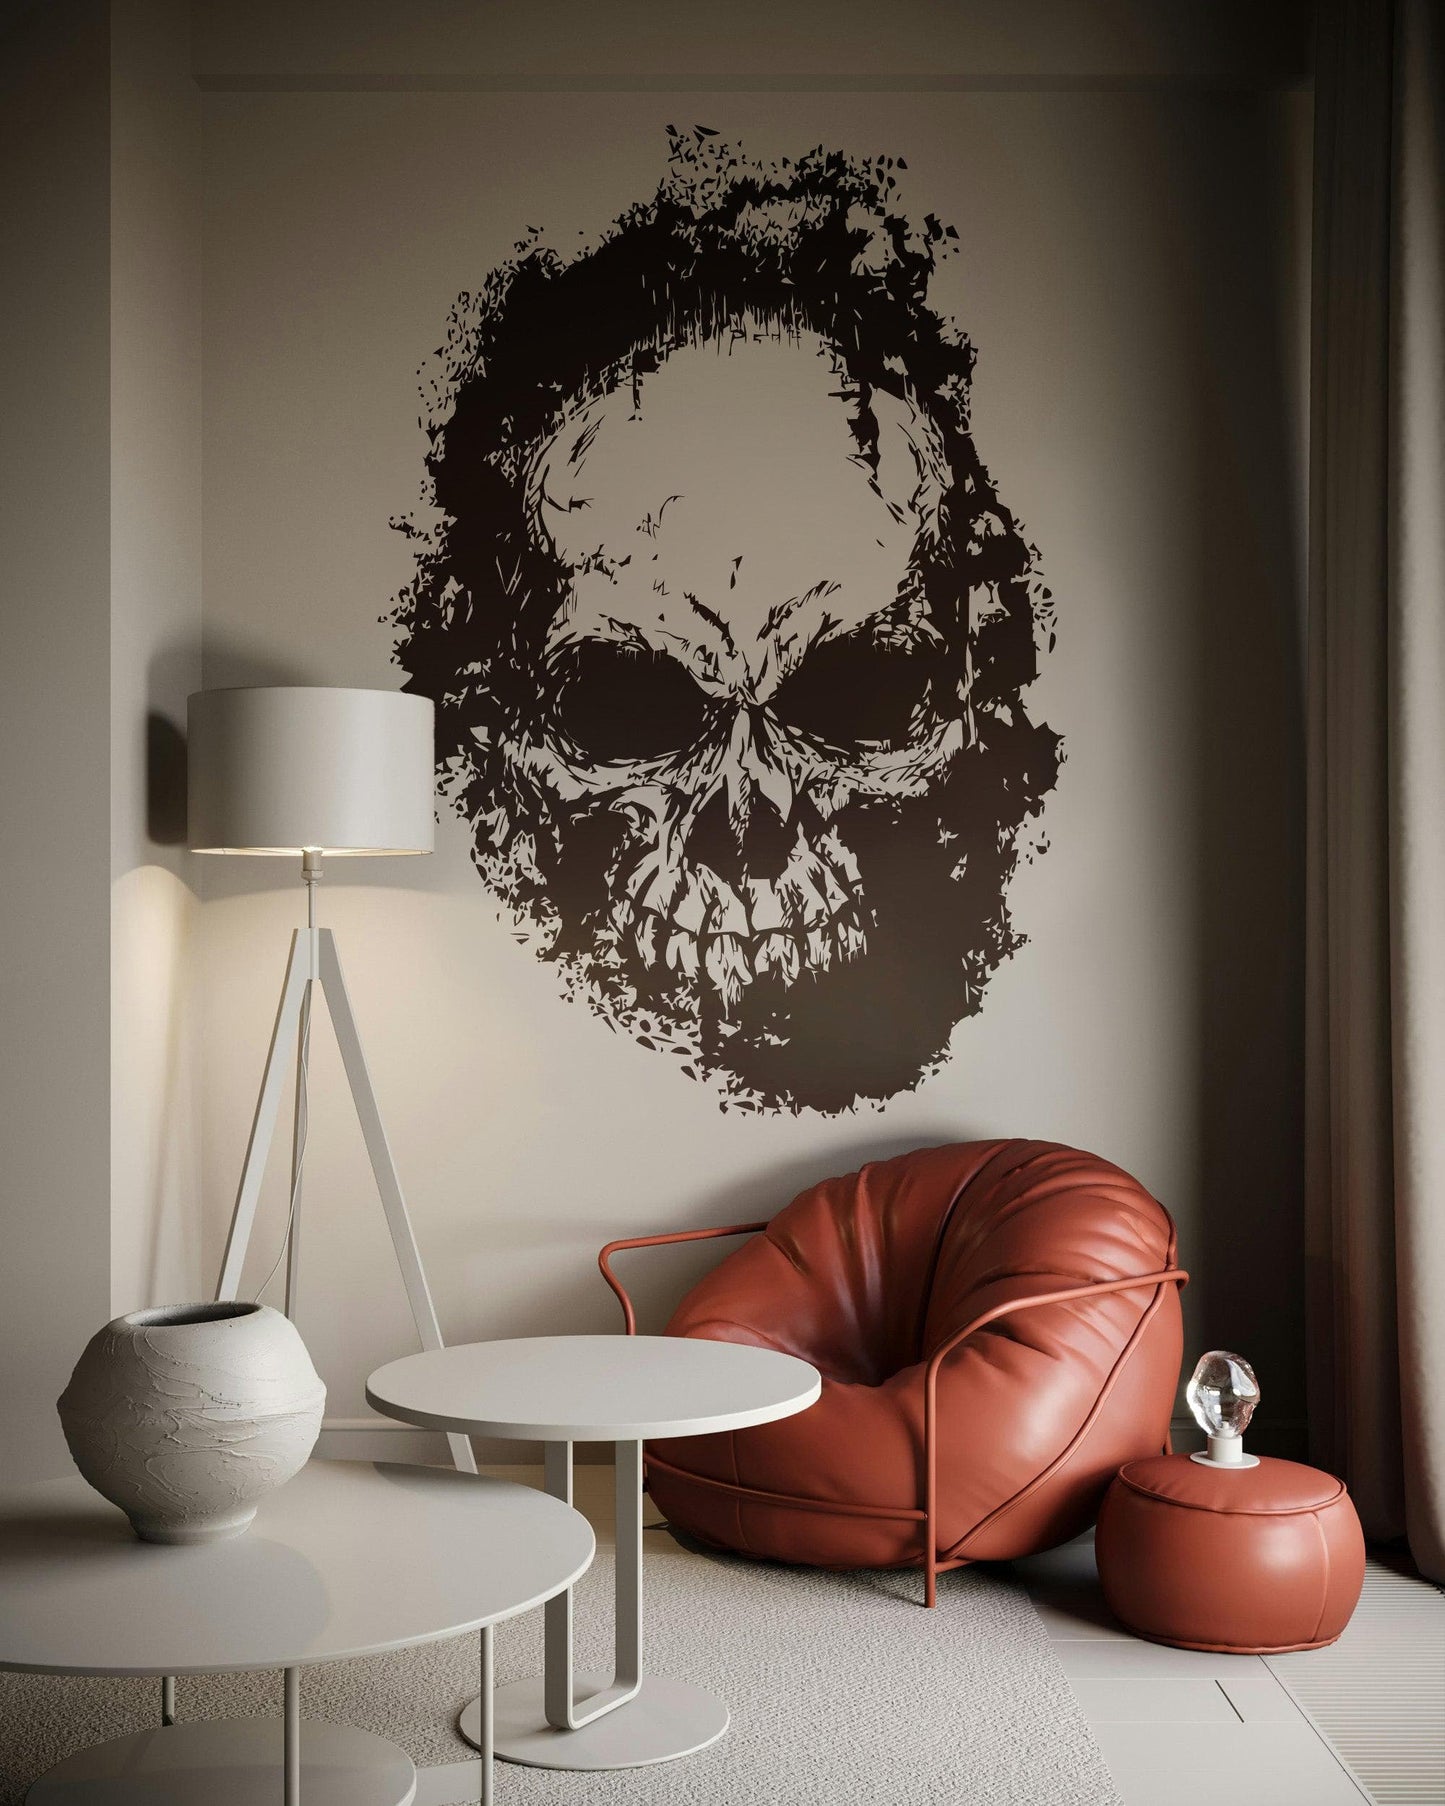 Grunge Skull Wall Decal Sticker. #847